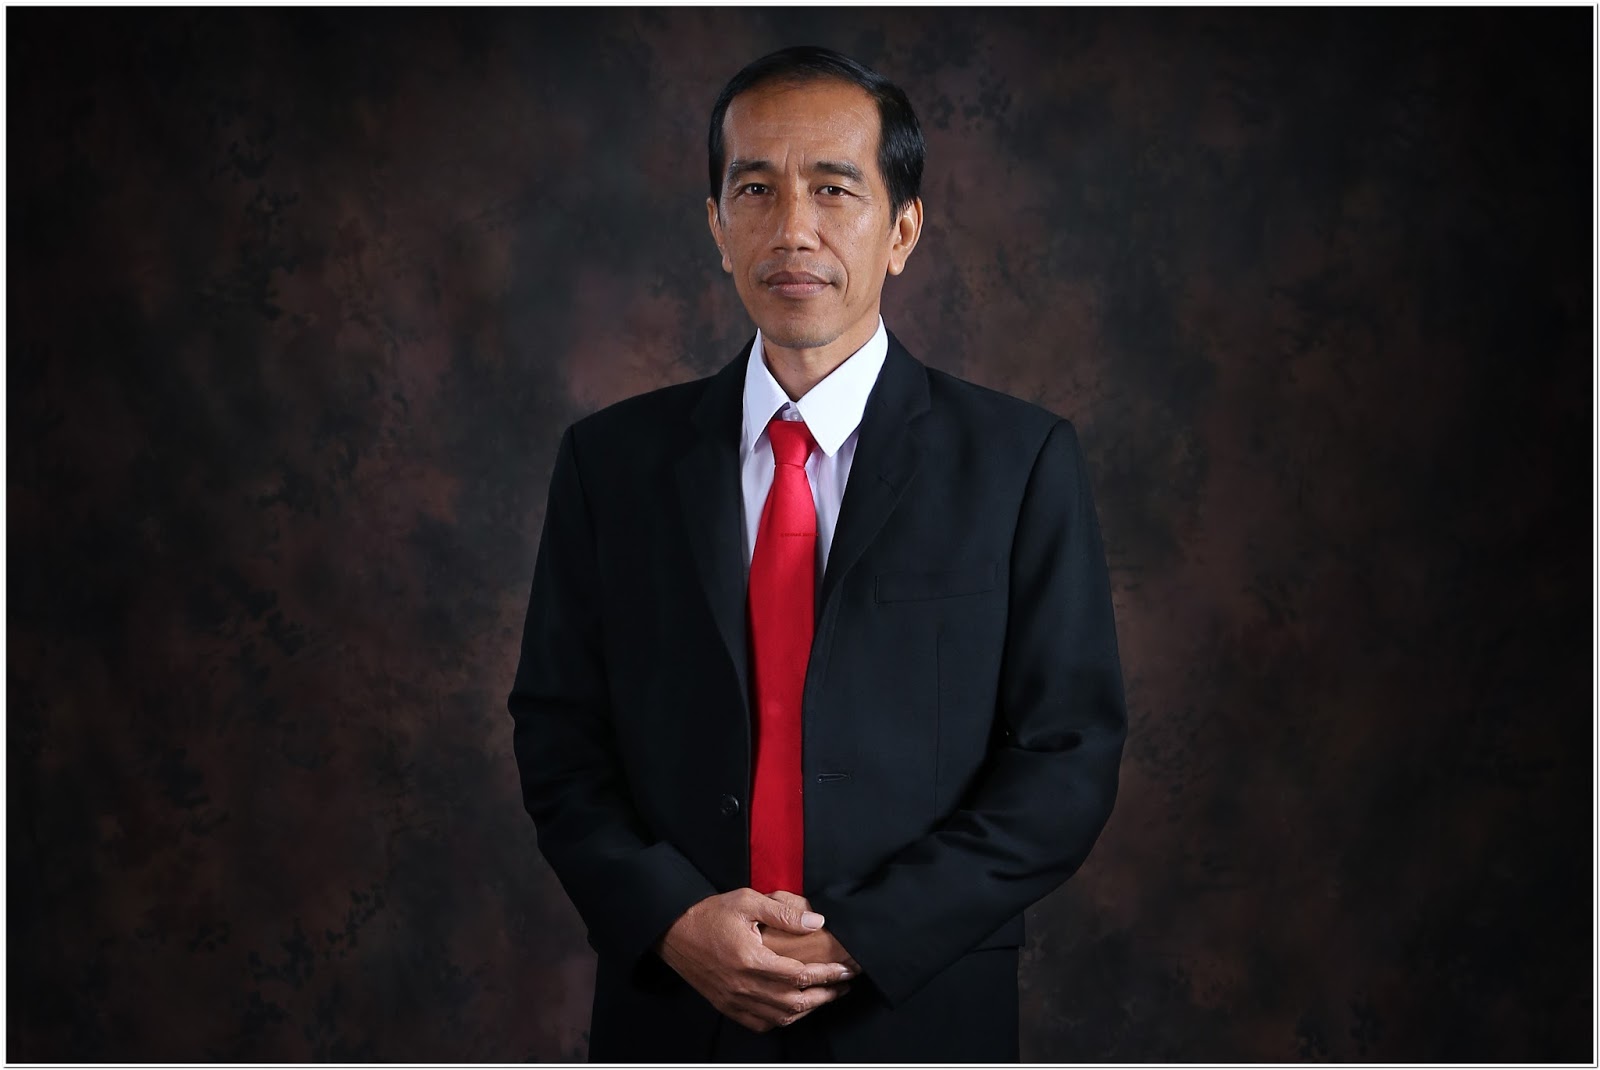 Biografi Joko Widodo "Jokowi" - Presiden ke 7 Indonesia dengan